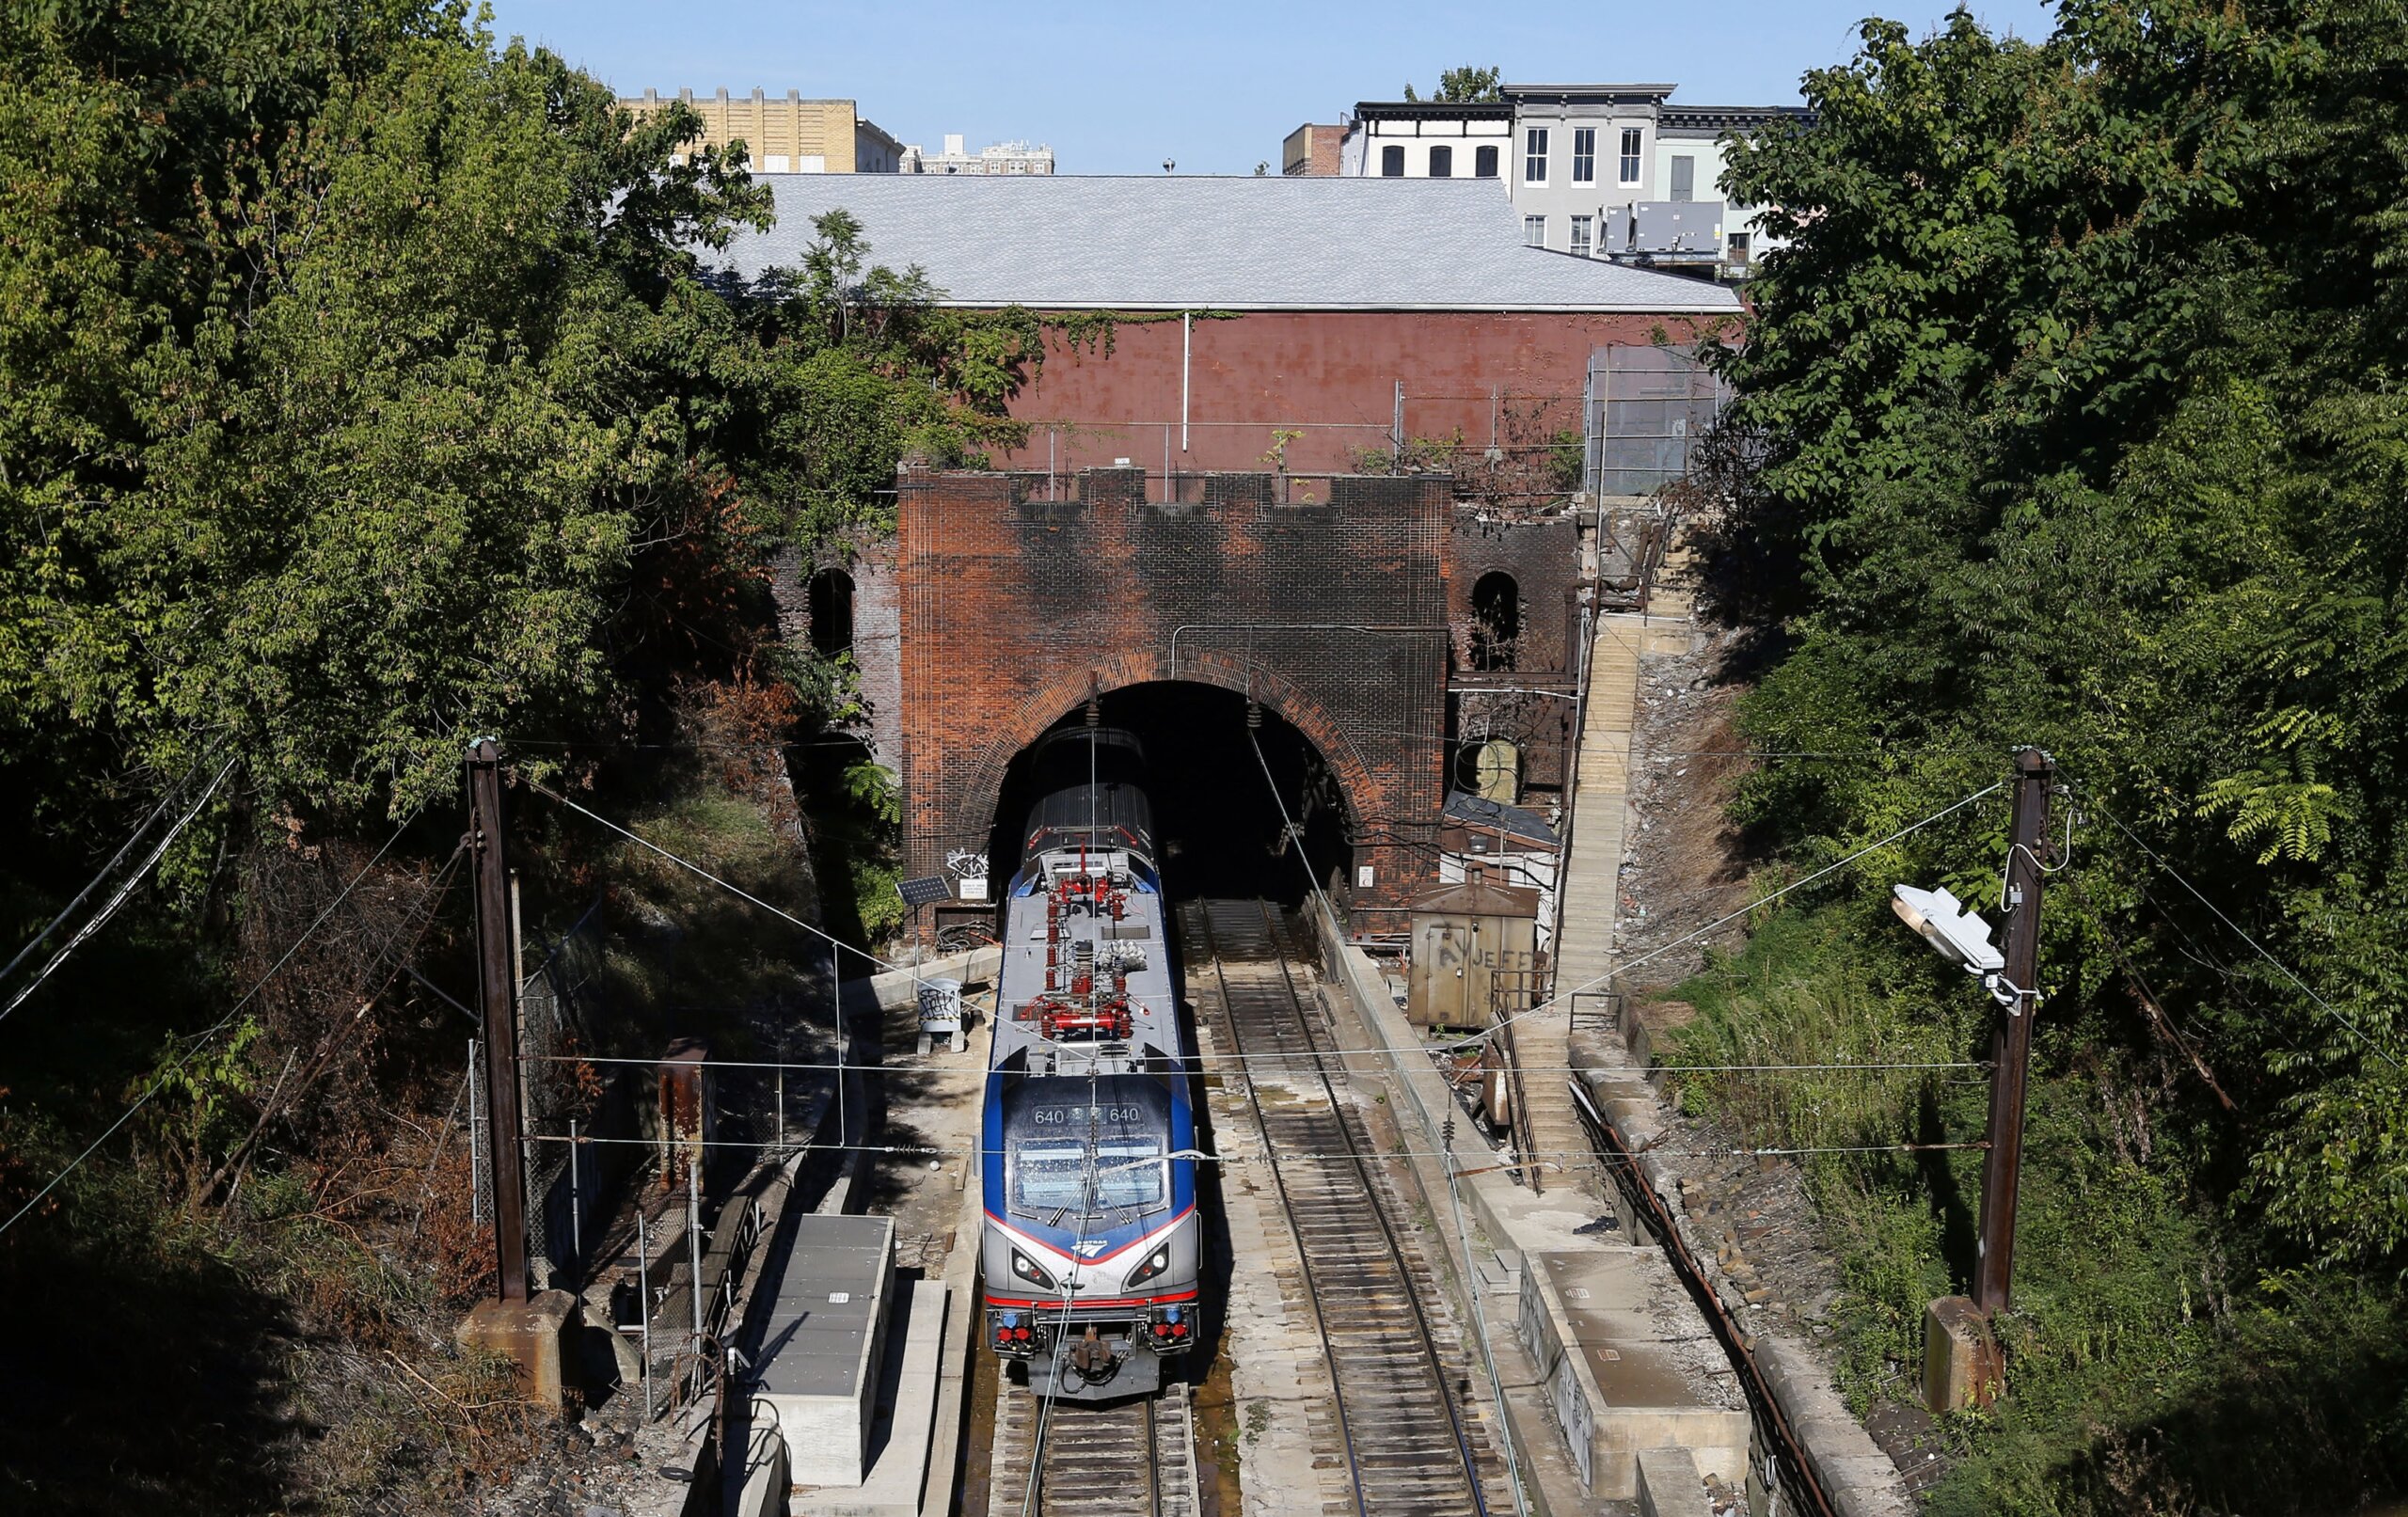 For ‘Amtrak Joe’ Biden, Baltimore rail tunnel visit personal